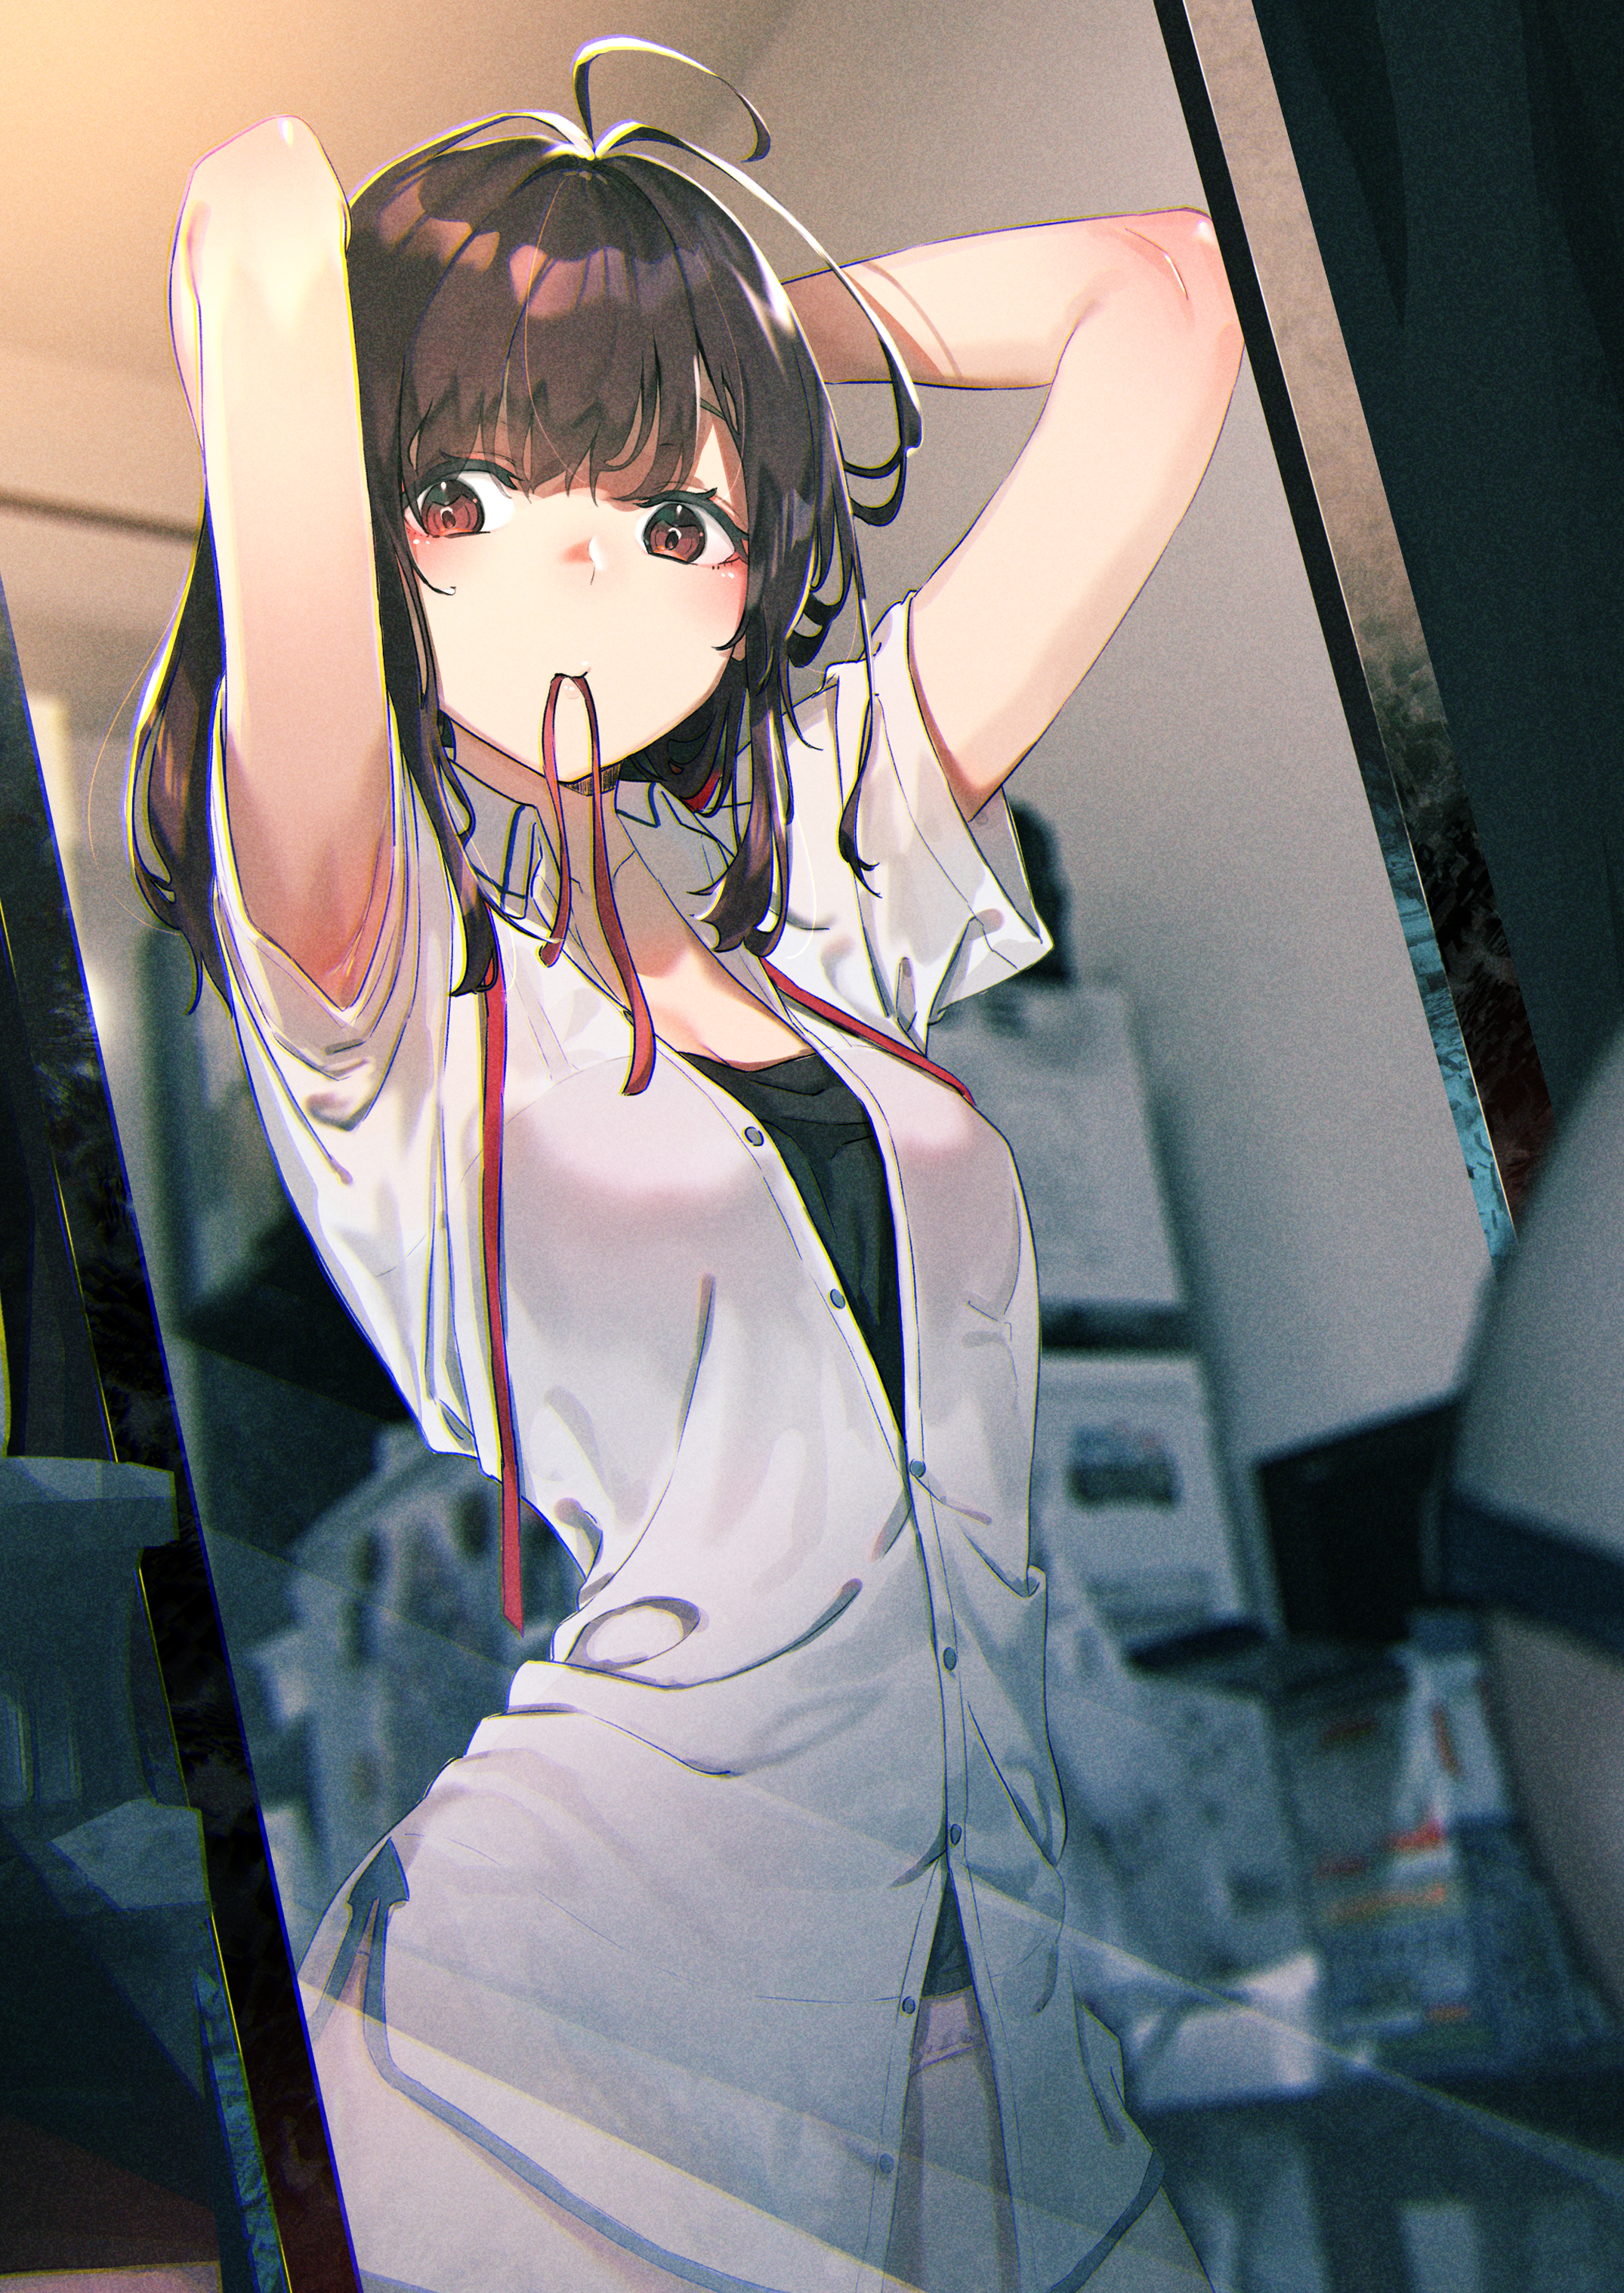 Anime Girls Original Characters Brunette Bangs Hands On Head Ribbon Shirt Mirror Reflection Artwork  2150x3035